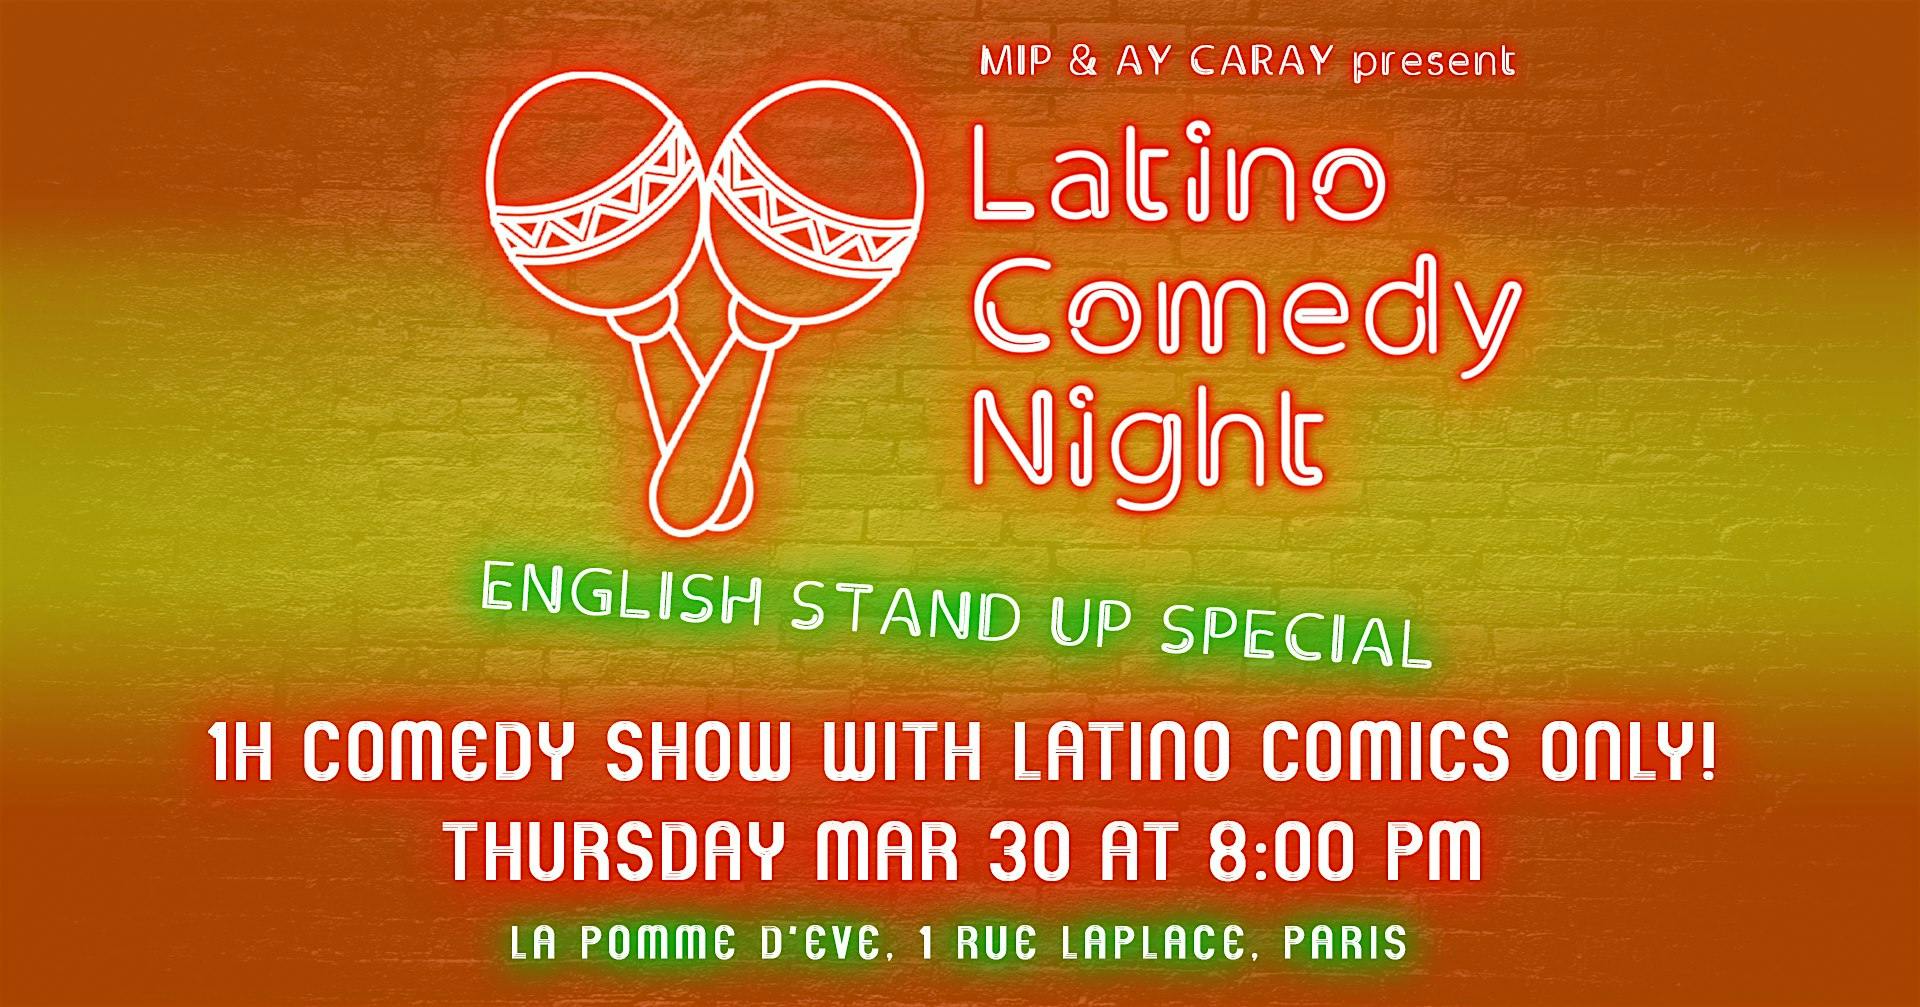 Latino Comedy Night in English | Comedy Show in Paris logo